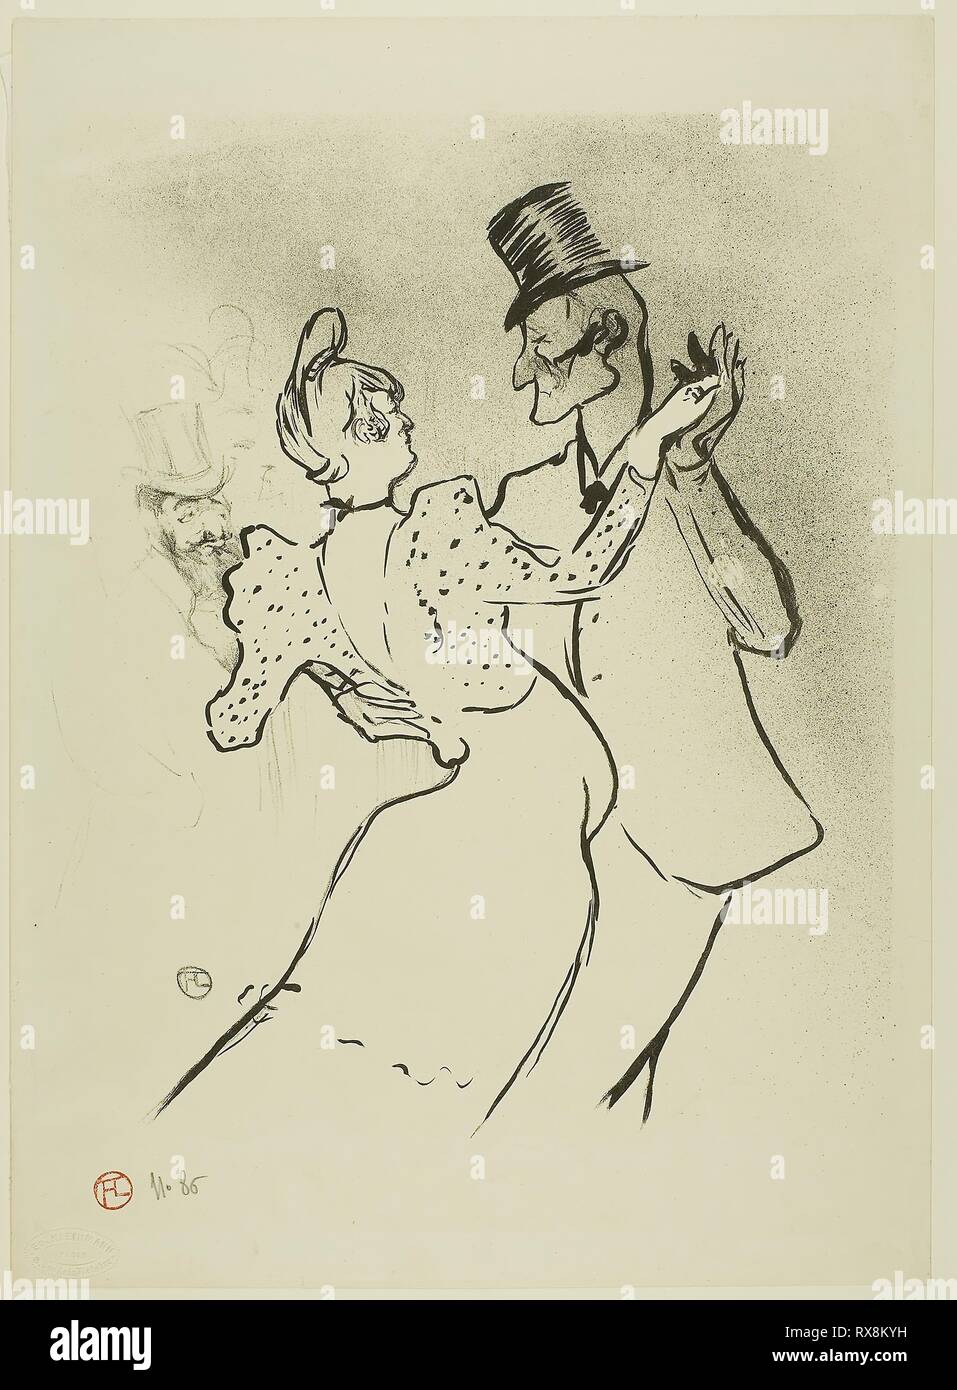 La Goulue. Henri de Toulouse-Lautrec; French, 1864-1901. Date: 1894. Dimensions: 308 × 254 mm (image); 383 × 278 mm (sheet). Lithograph on ivory wove paper. Origin: France. Museum: The Chicago Art Institute. Stock Photo